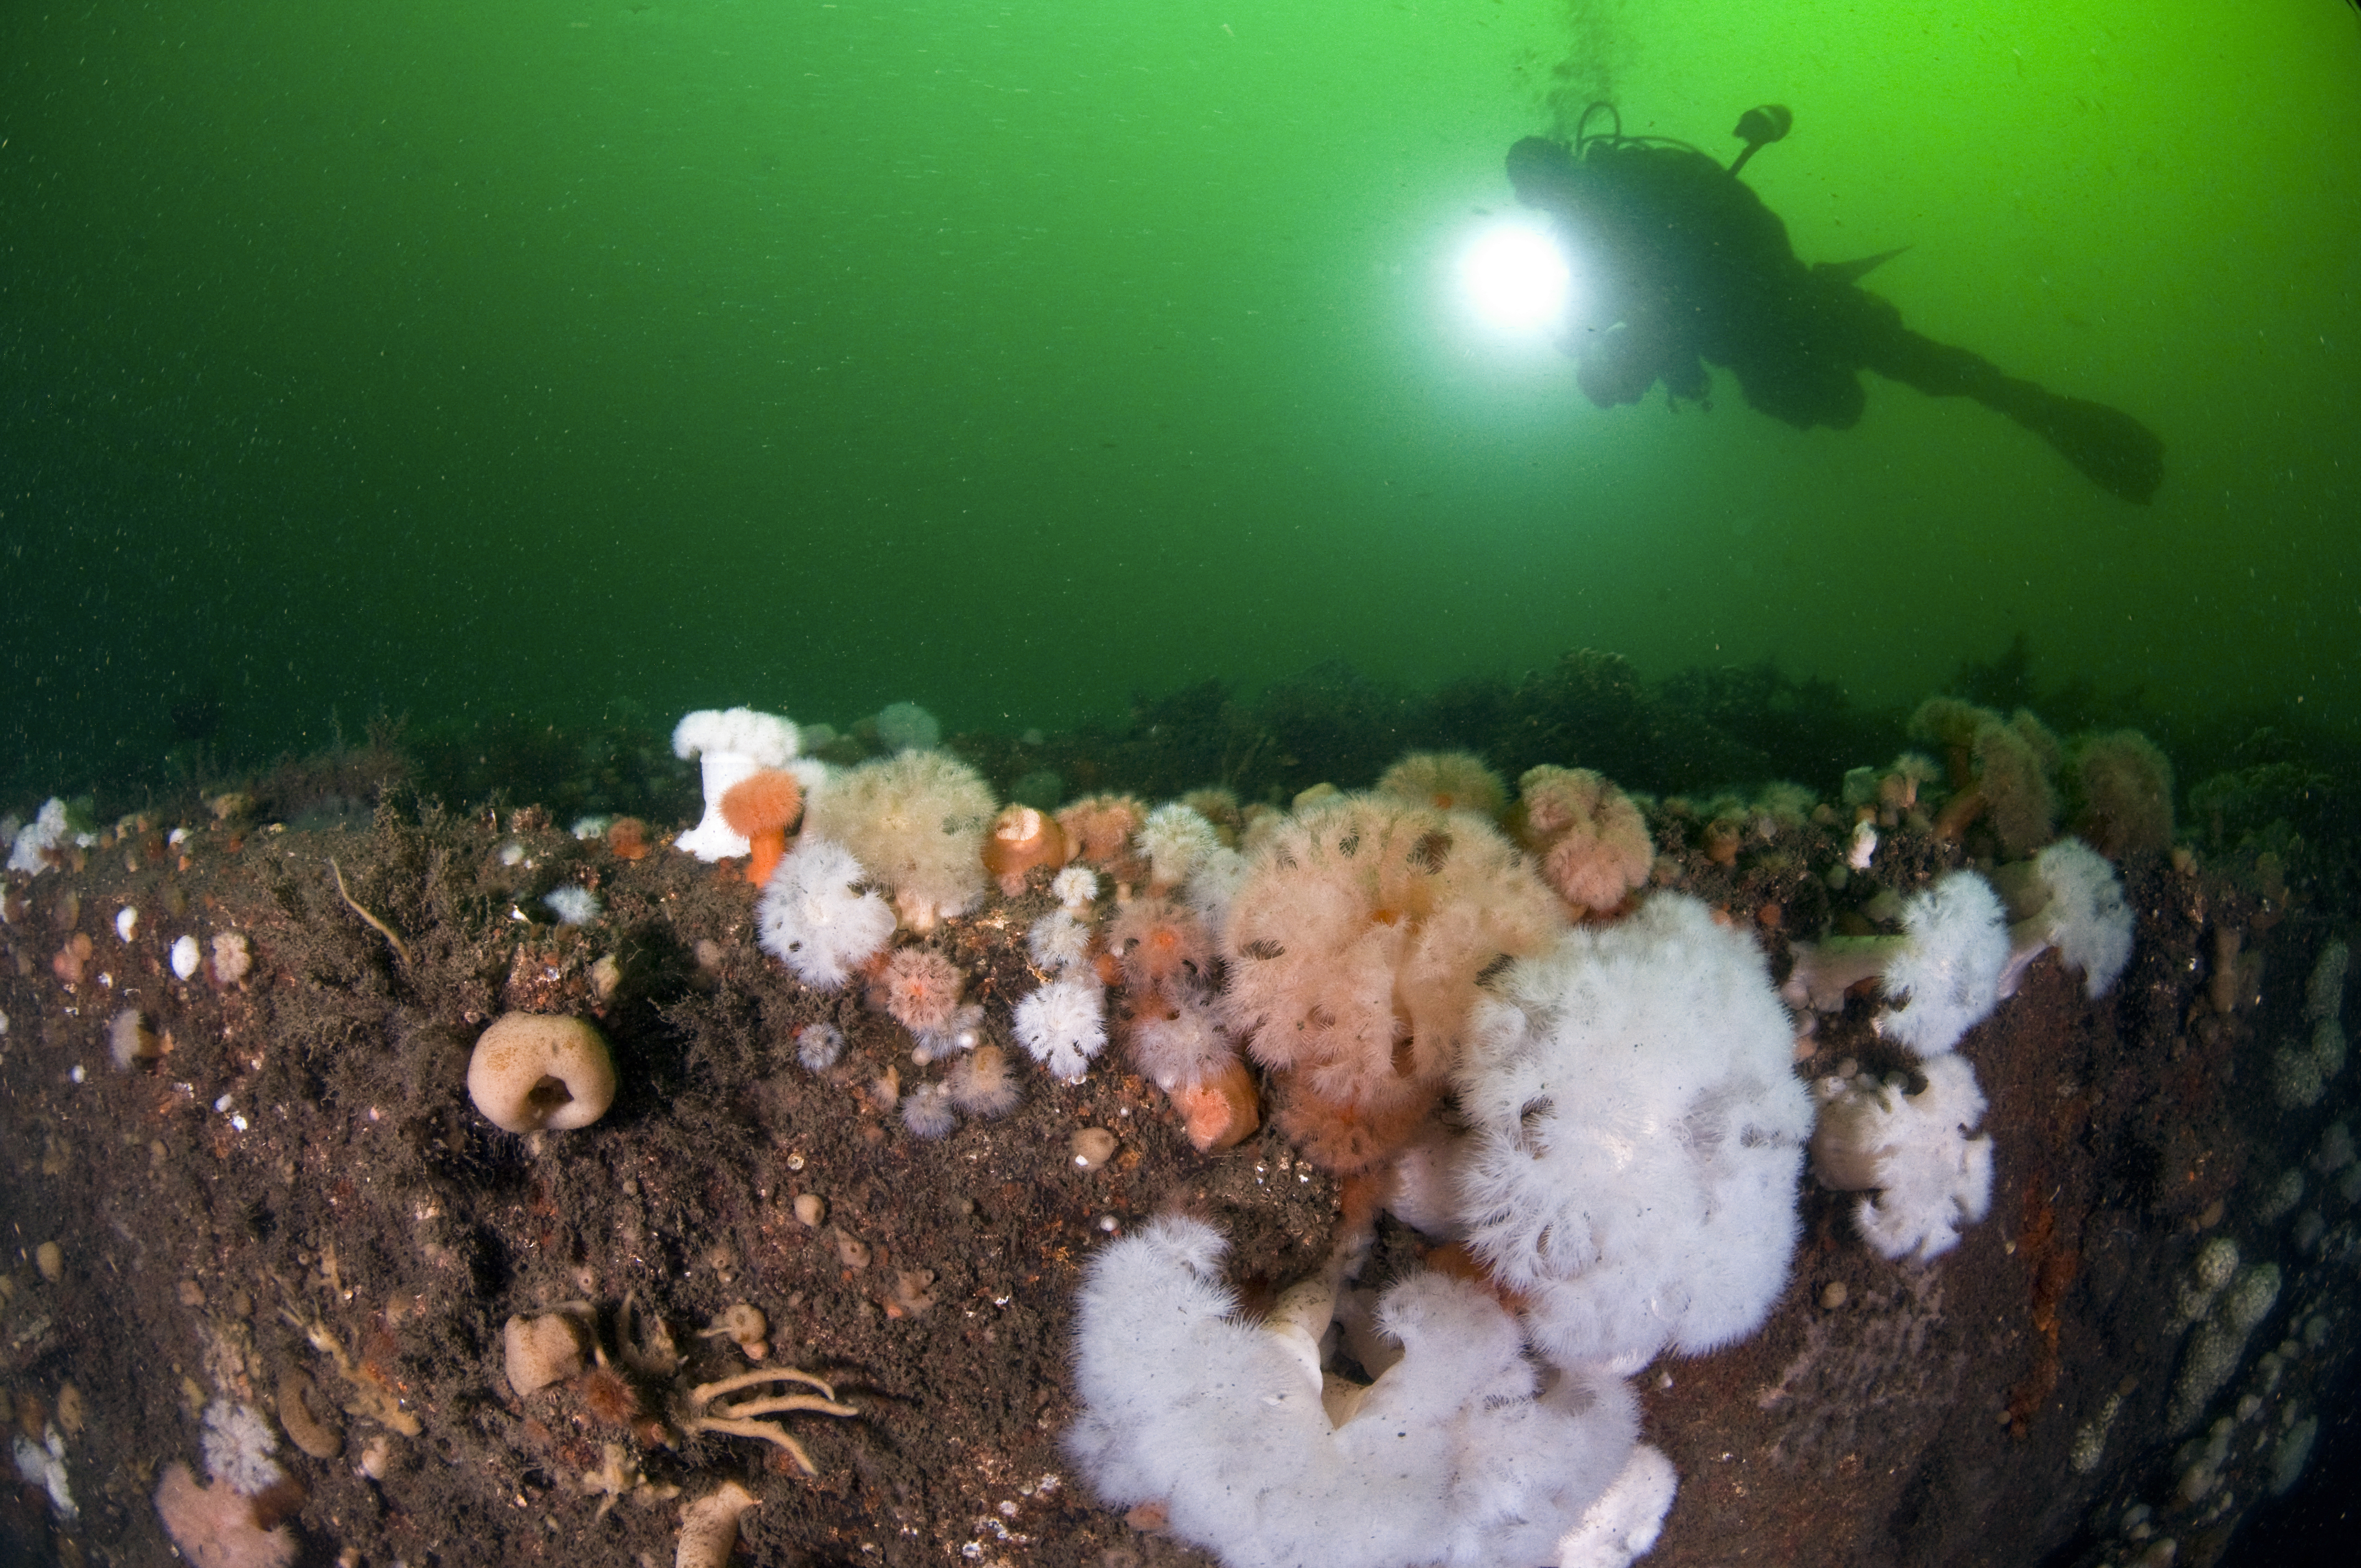 Anemone Wreck, Øresund, Denmark. Photo by Morten Bjørn Larsen